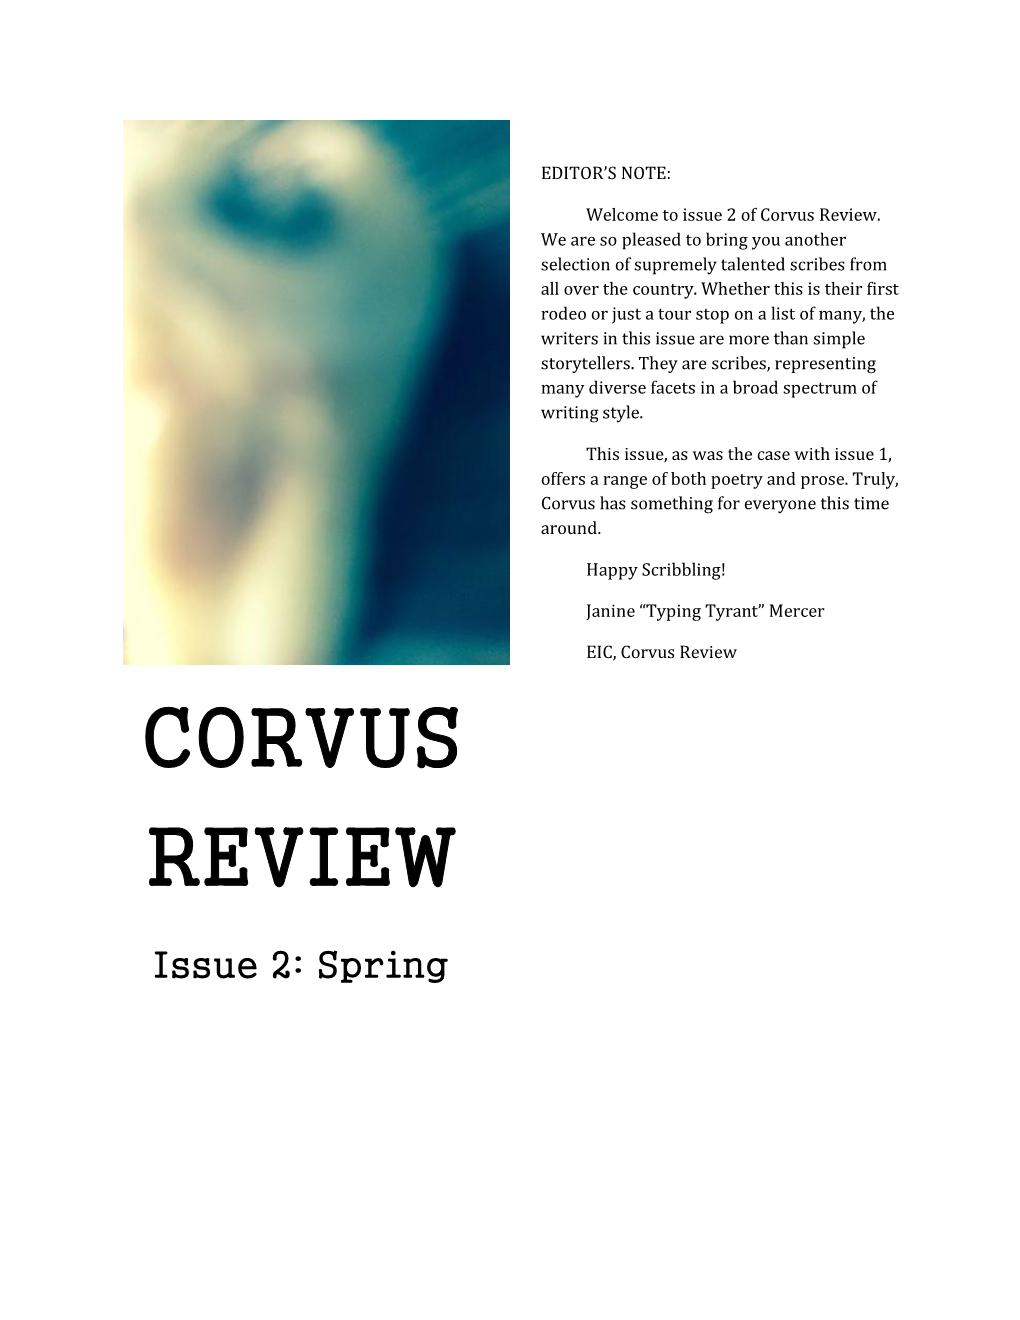 Corvus Review